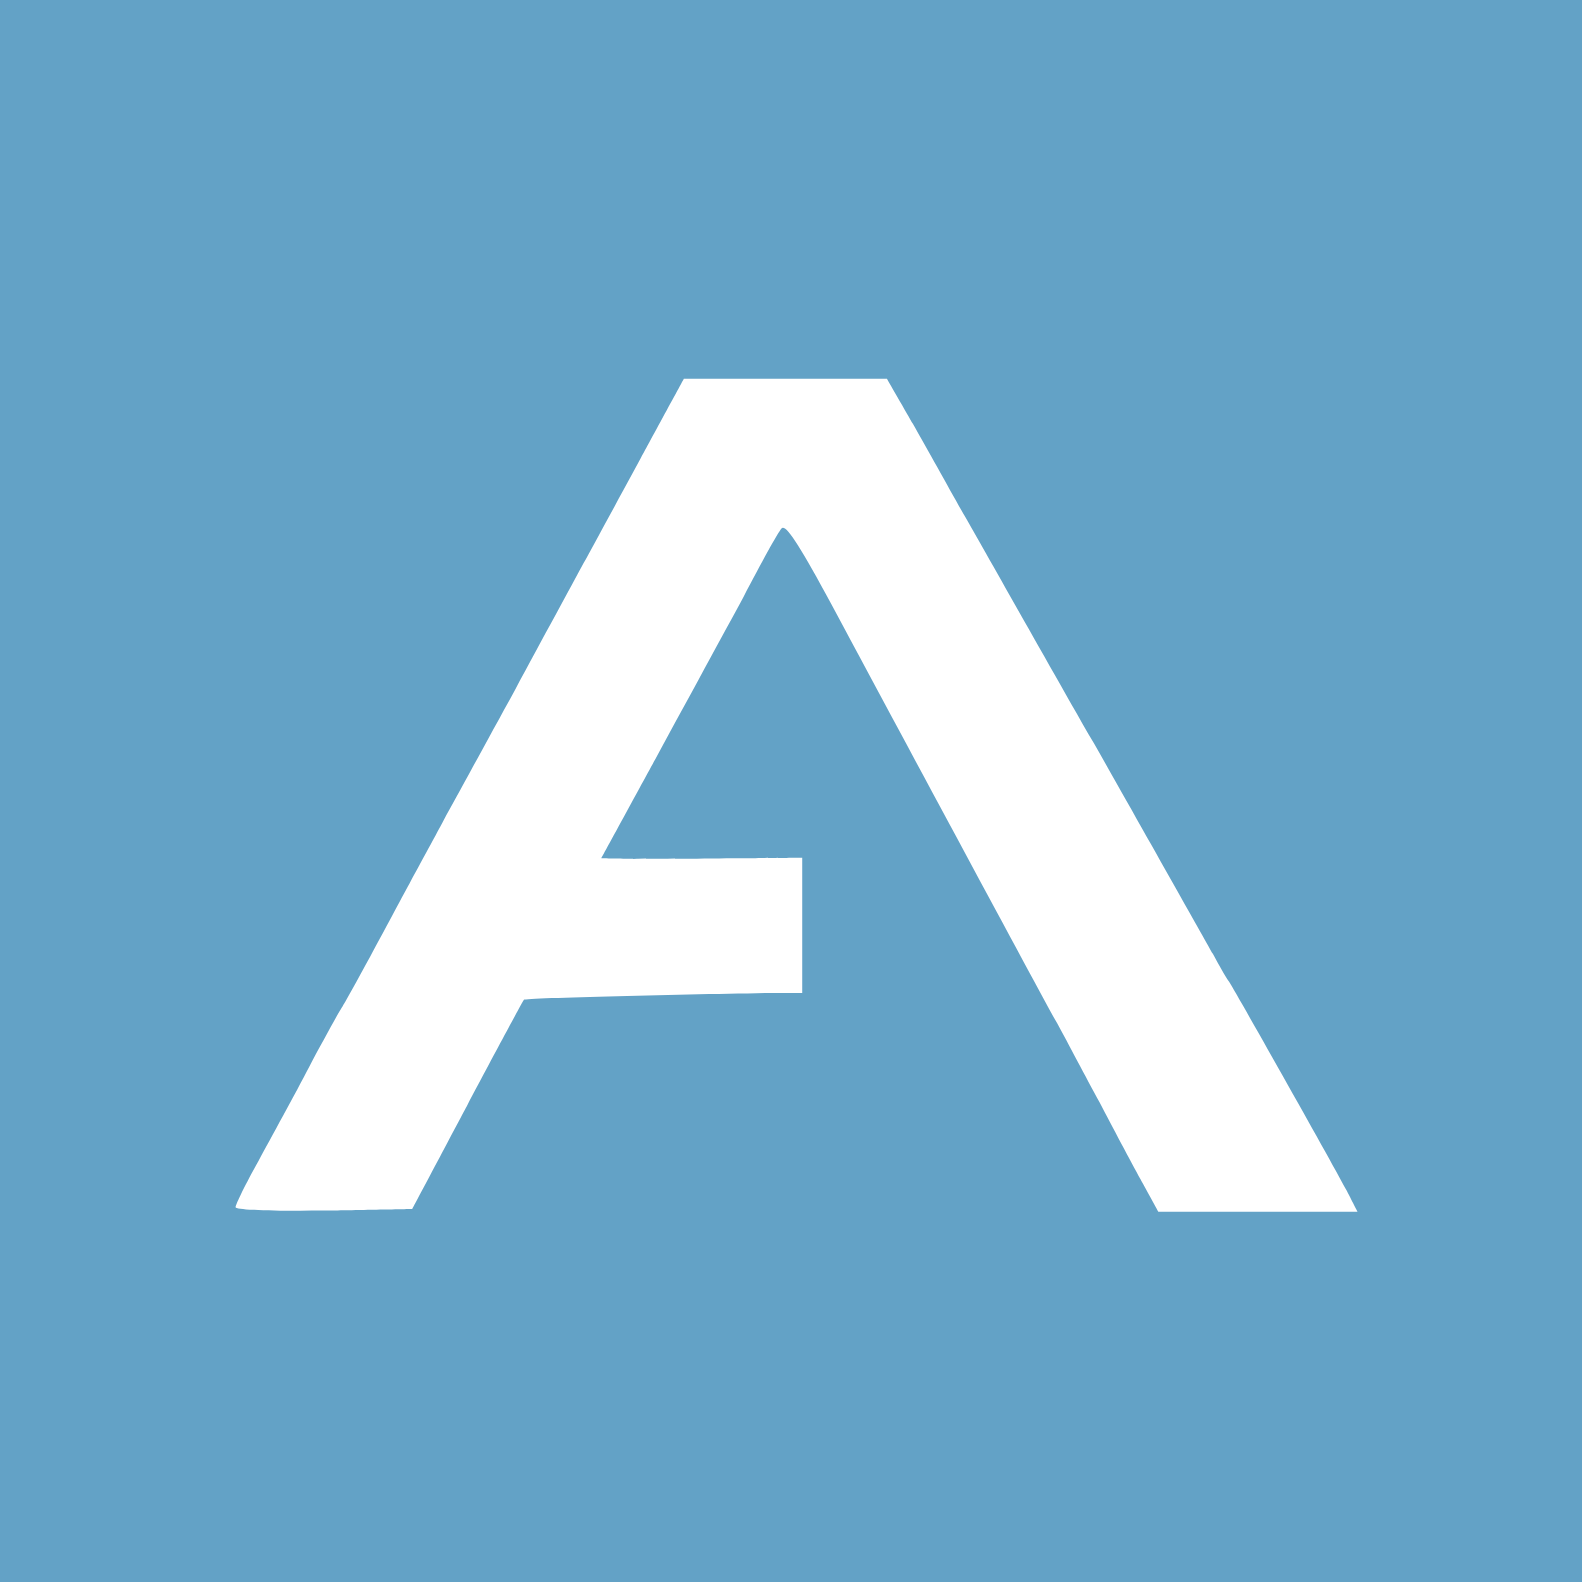 Addtech AB logo (PNG transparent)